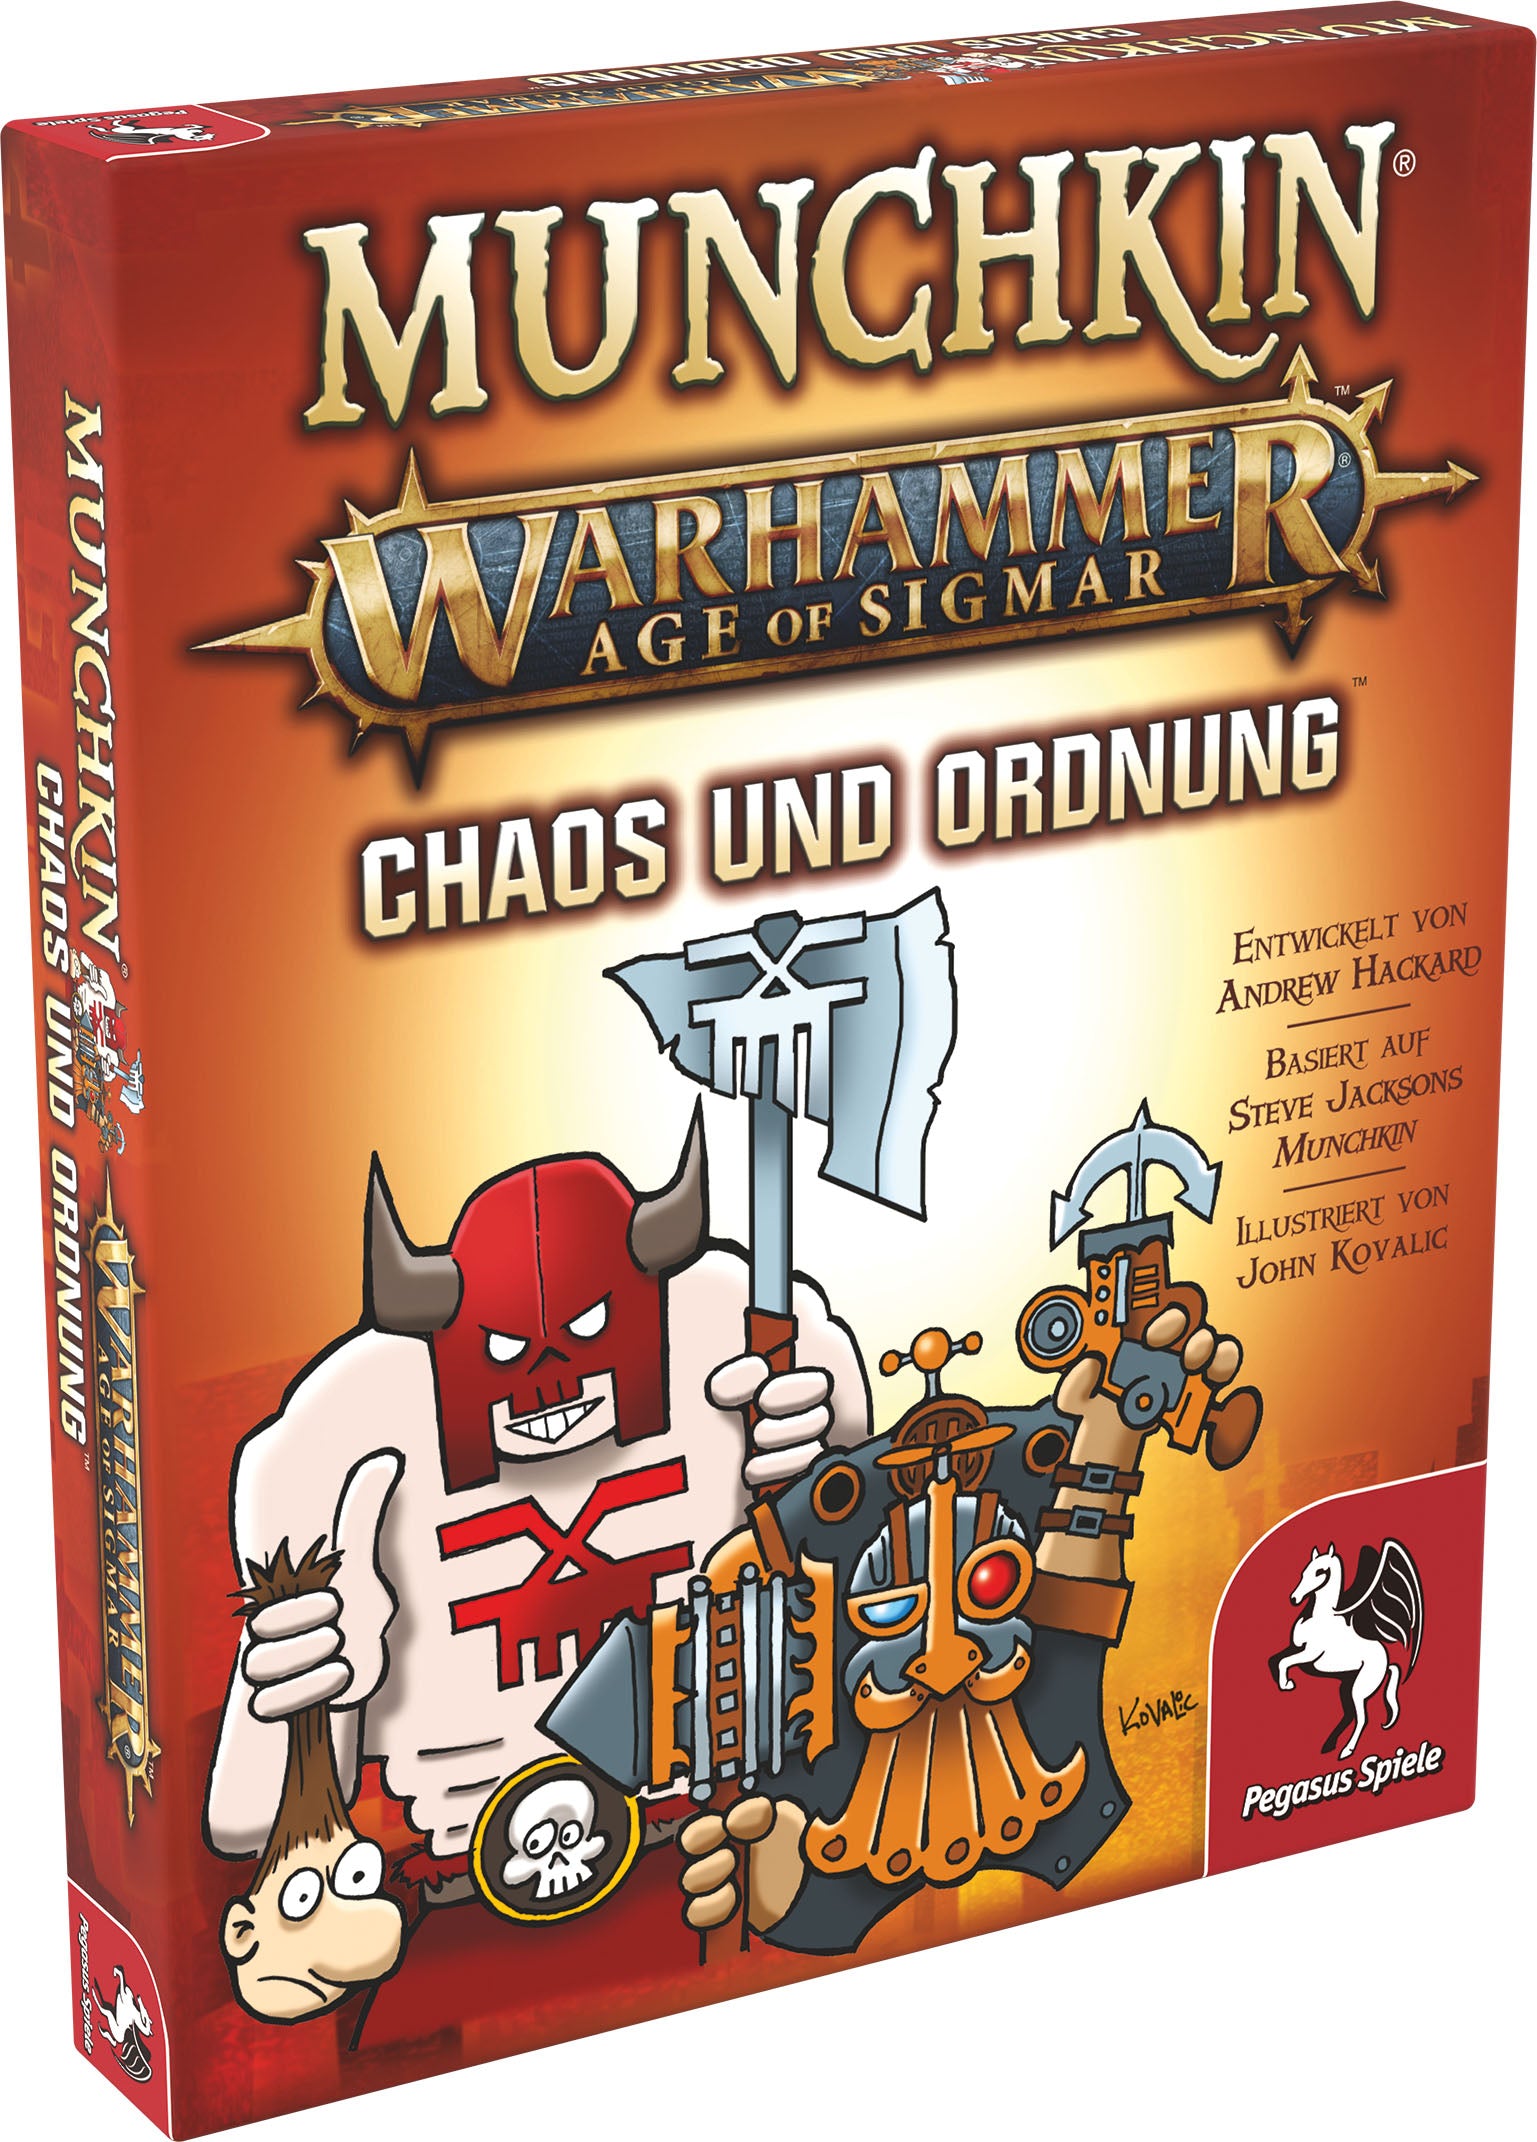 Munchkin Warhammer Age of Sigmar - Chaos & Ordnung